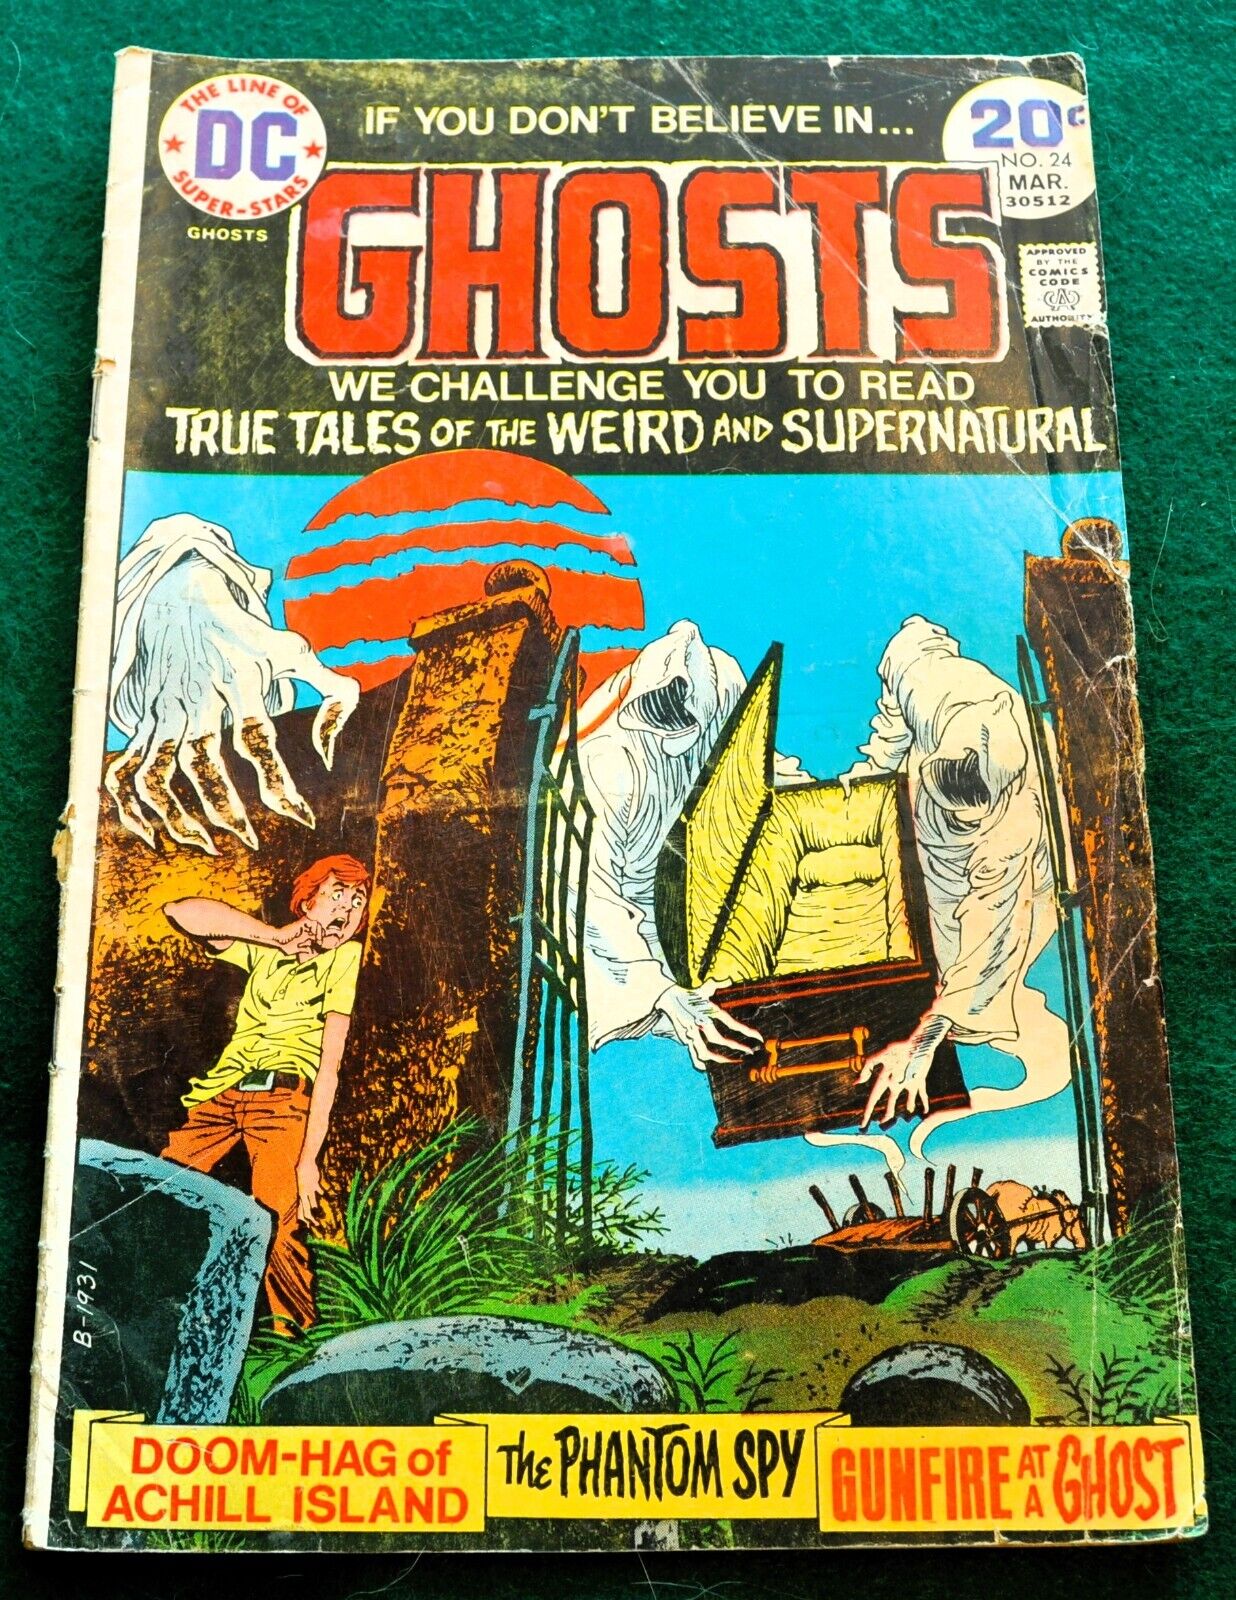 Ghosts #24 -  DC Comics - Mar.  1974, $0.20 - VG